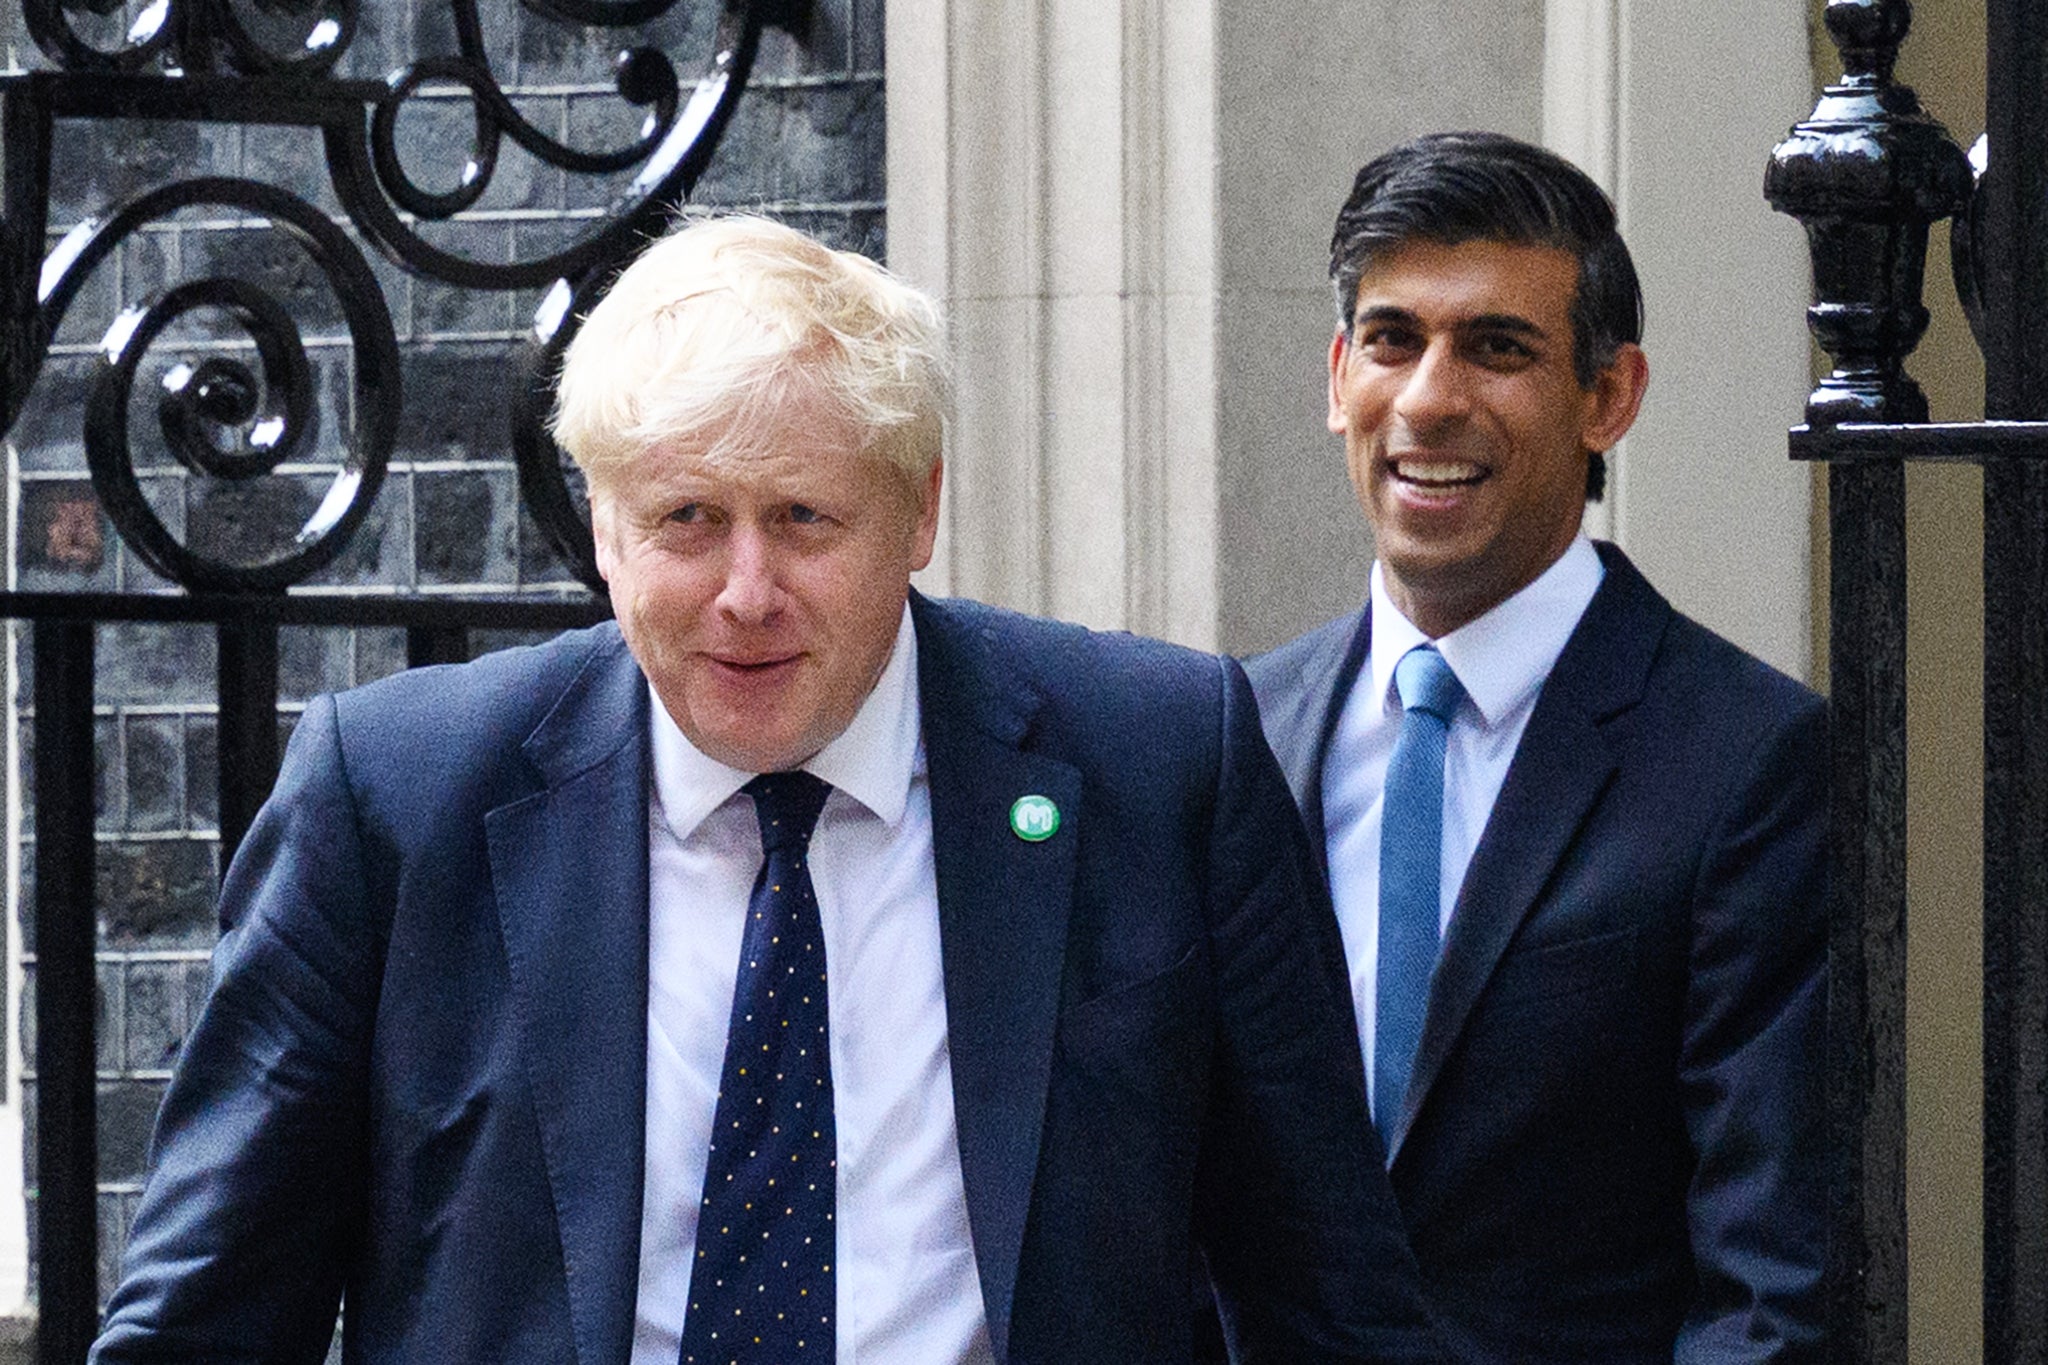 Boris Johnson and Rishi Sunak at odds over Brexit again